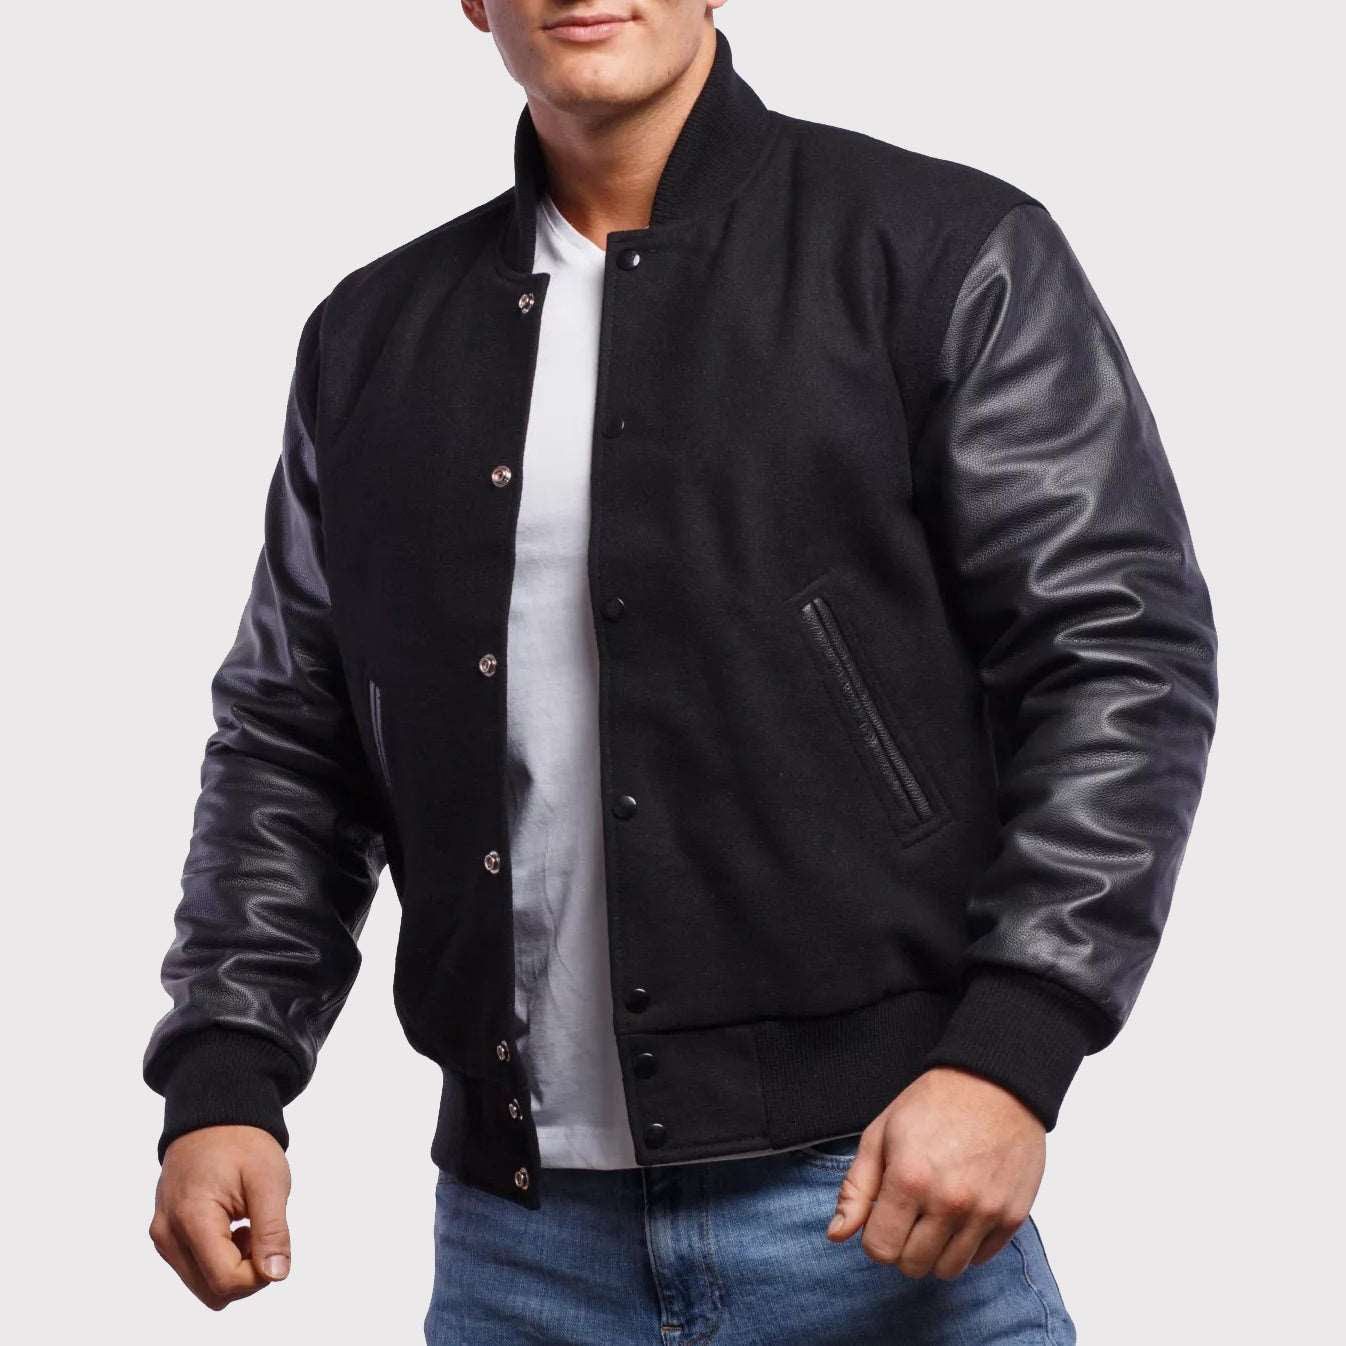 Stylish Black Wool & Leather Letterman Jacket